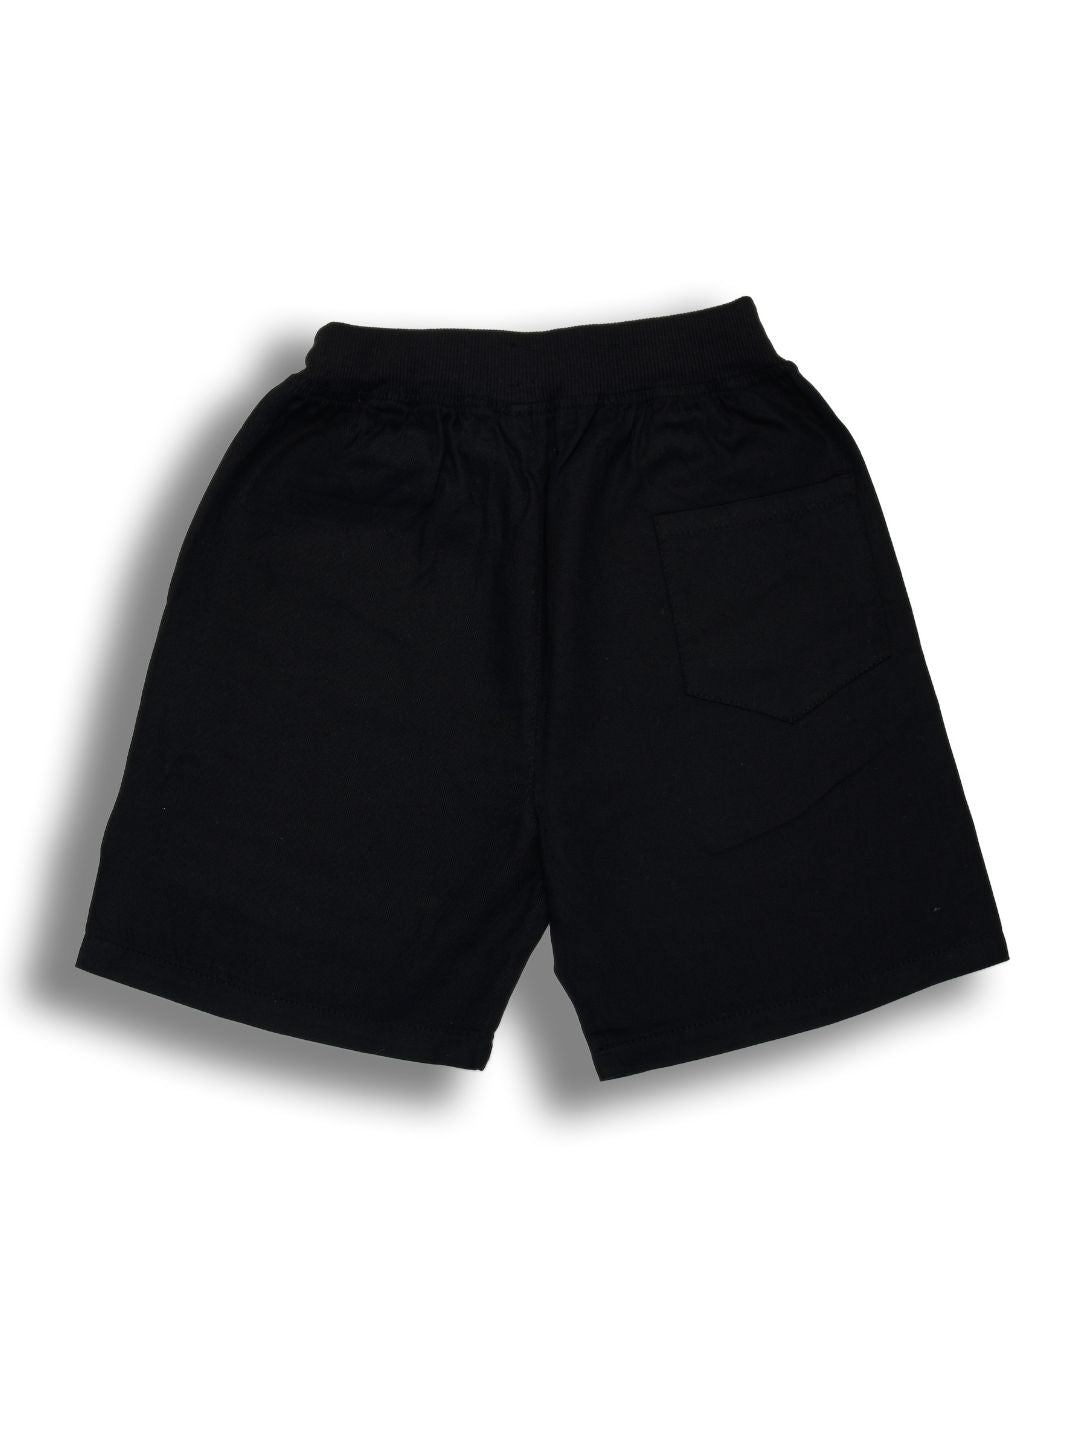 Pure Cotton Typogtaphy Boys Shorts - Black